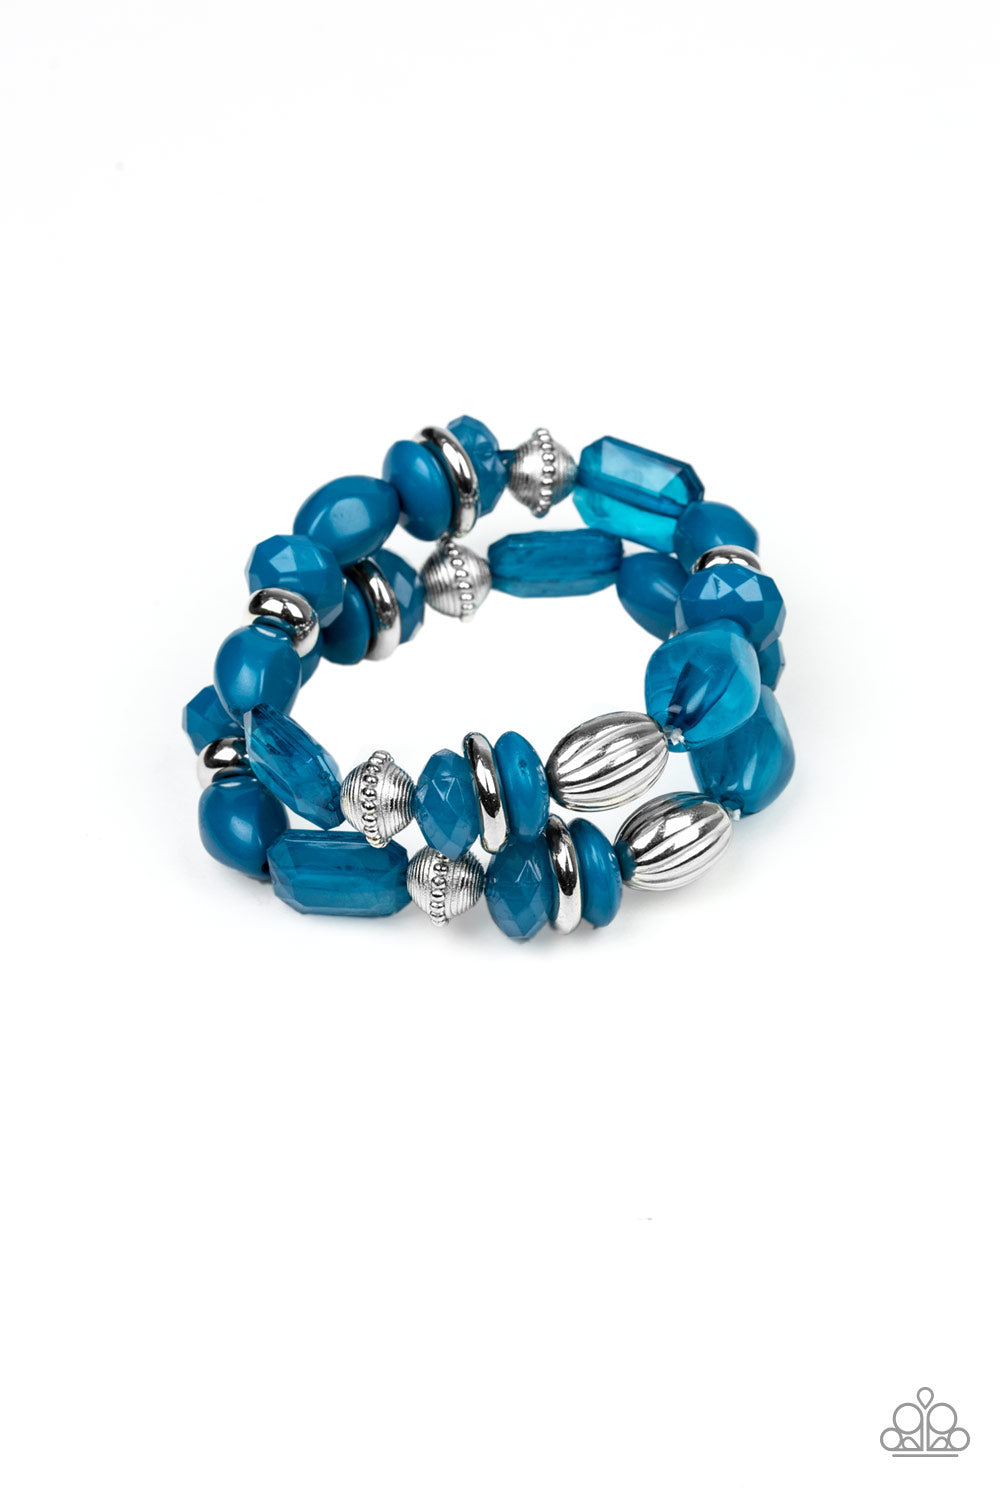 Beach Brunch - Blue bracelet